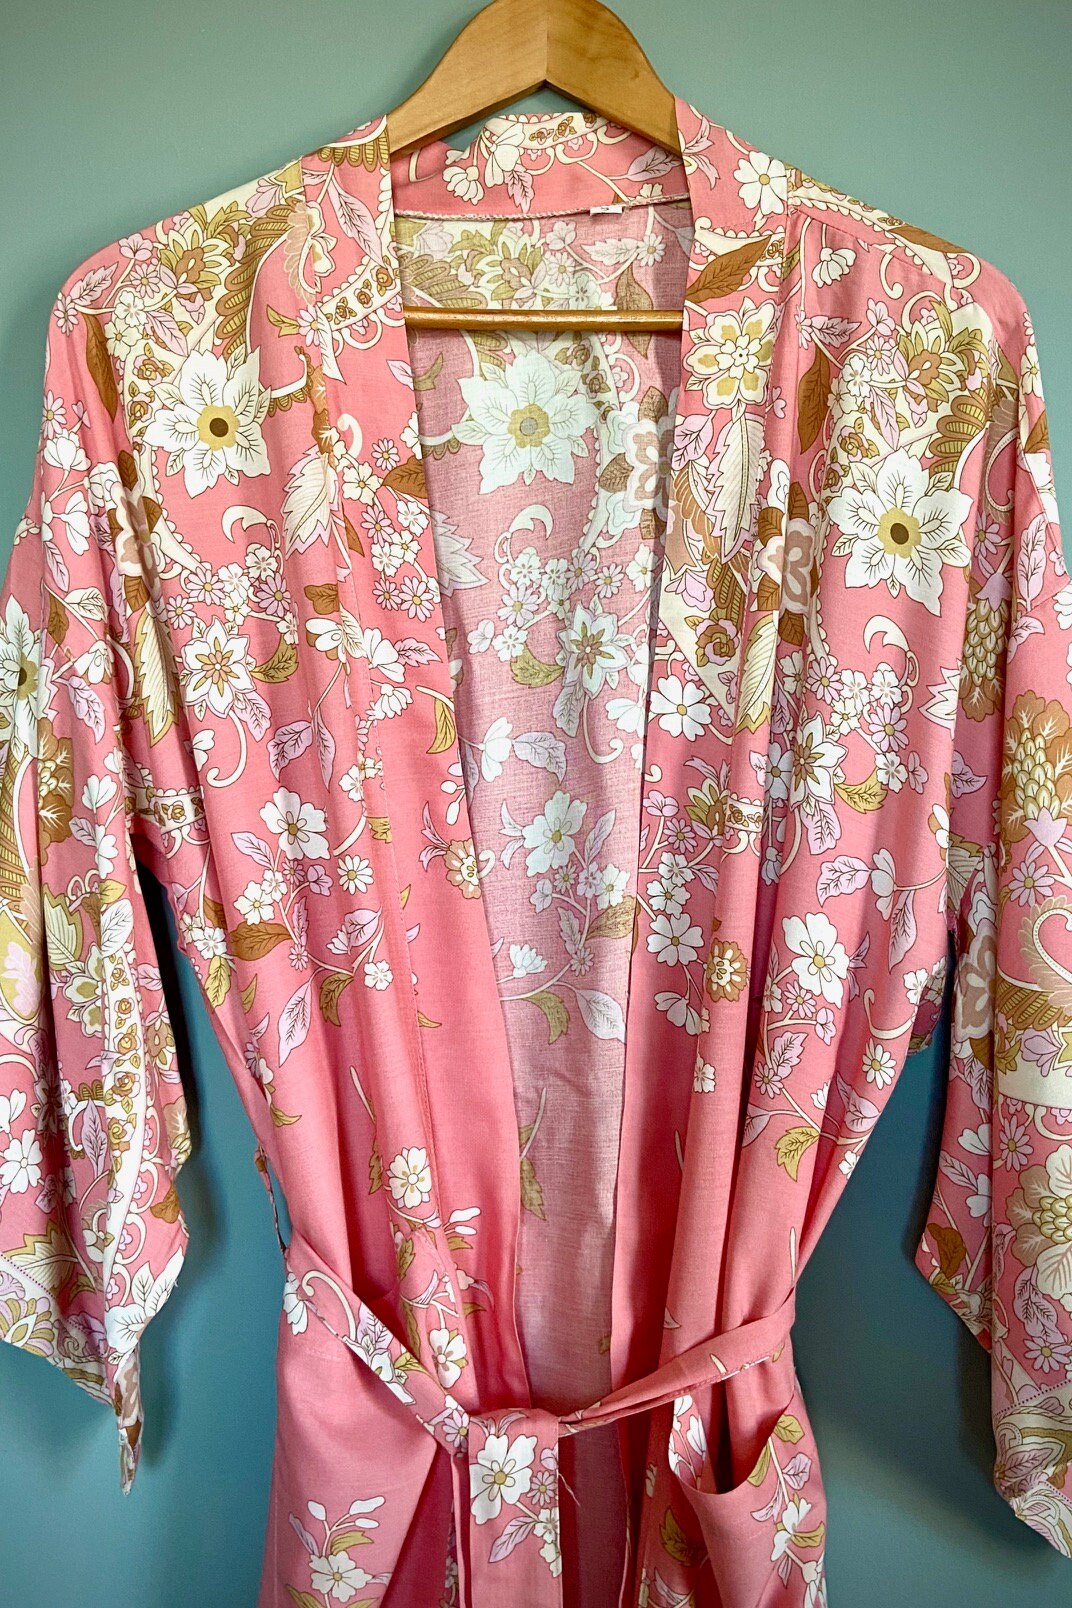 Pink Kimono Robe Dressing Gown Vintage style Floral Print | Etsy